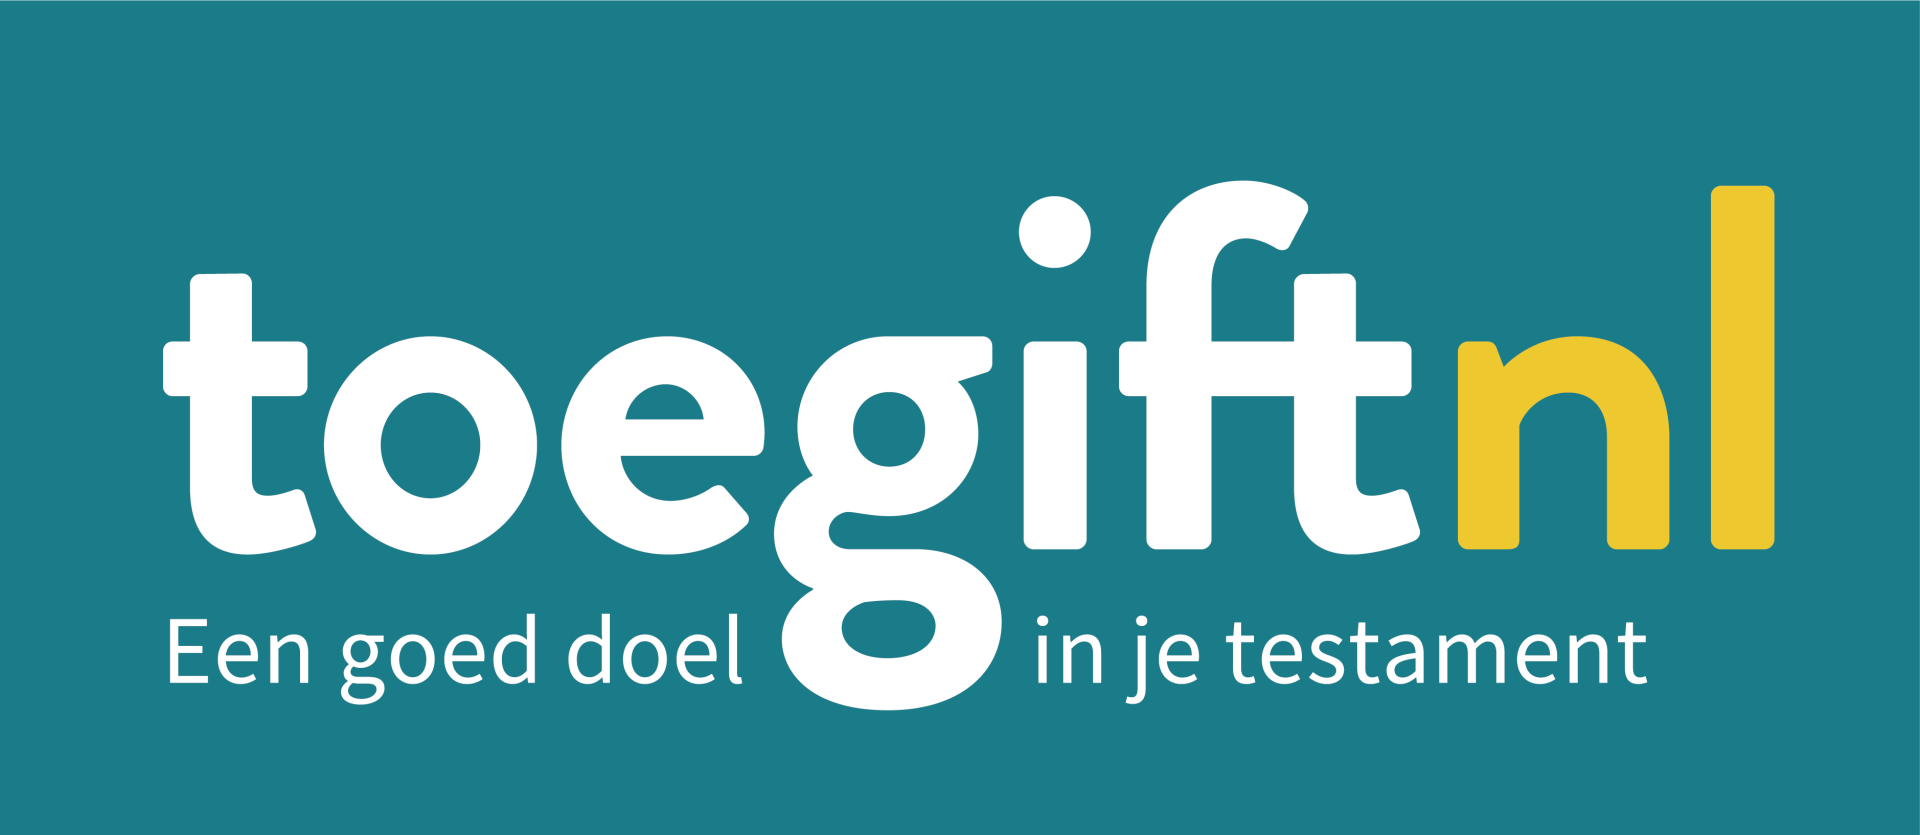 Campagne Toegift.nl